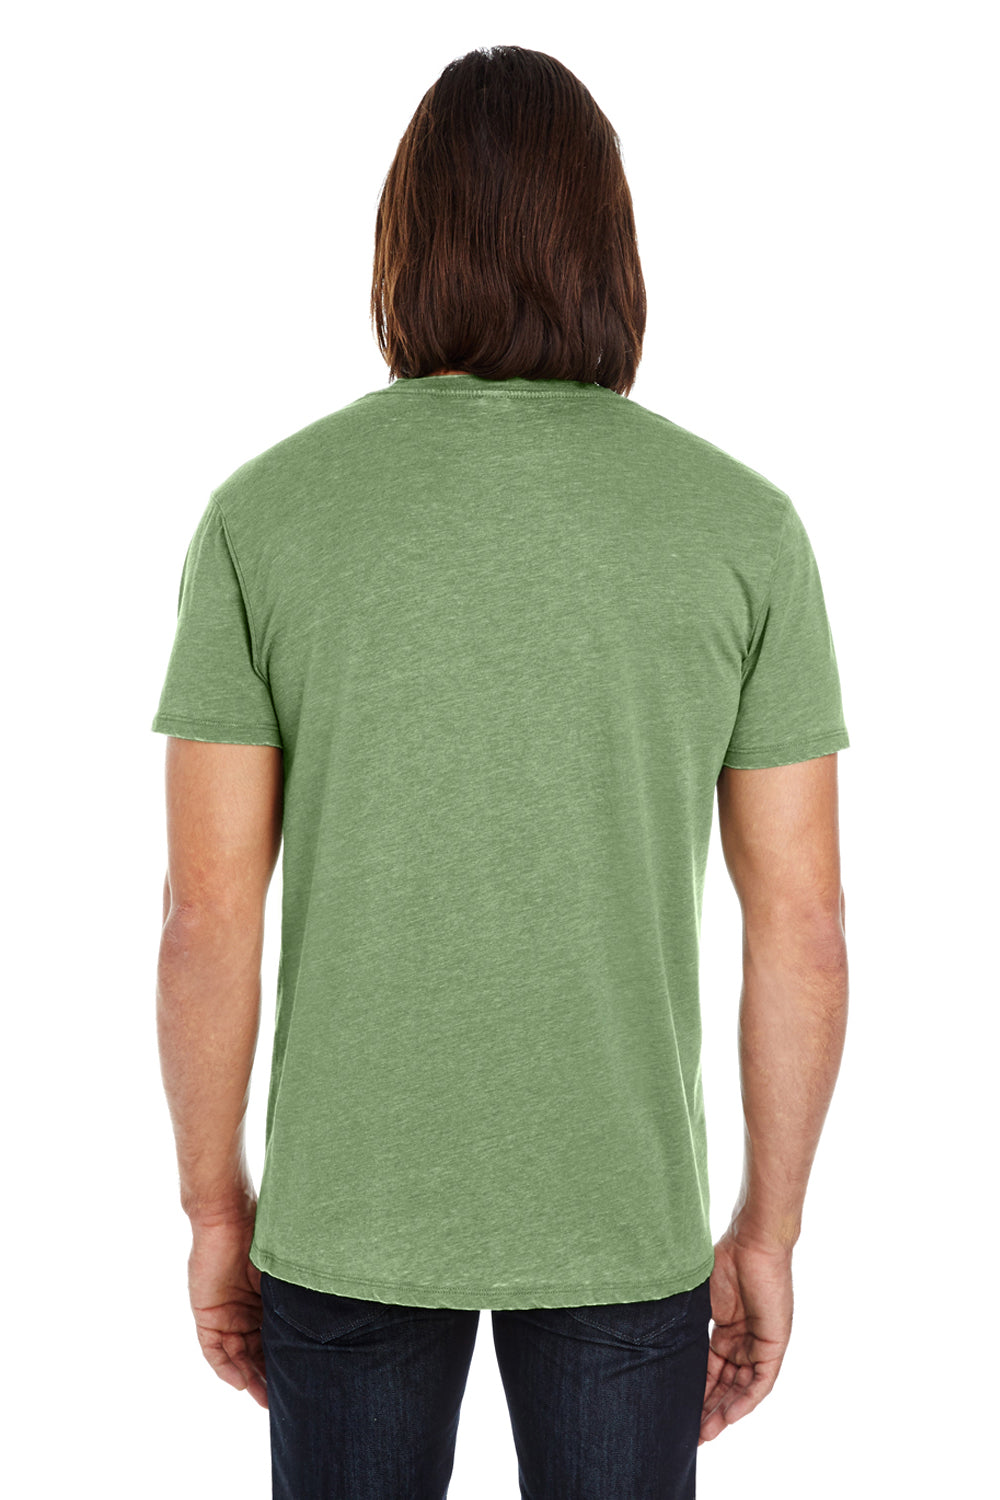 Threadfast Apparel 108A Mens Vintage Dye Short Sleeve Crewneck T-Shirt Grass Green Back